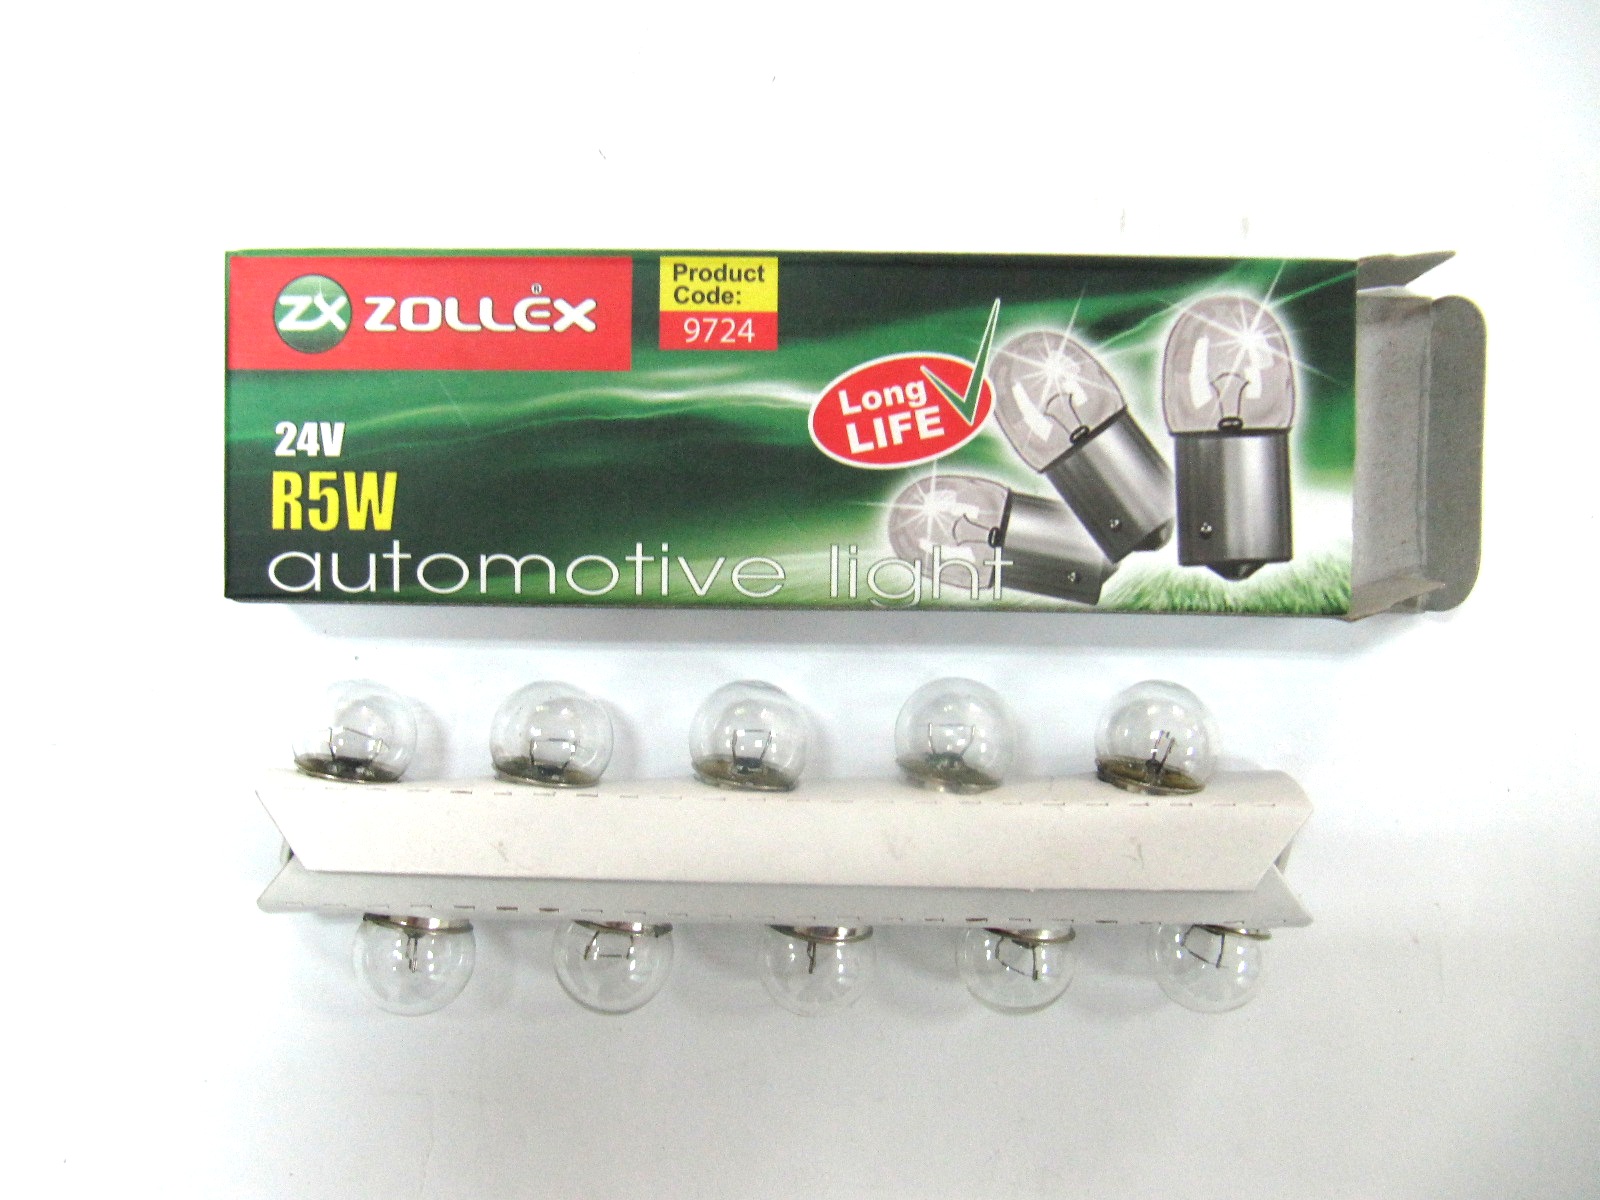 Zollex Лампа автомоб. R5W 24V 9724 (10шт)